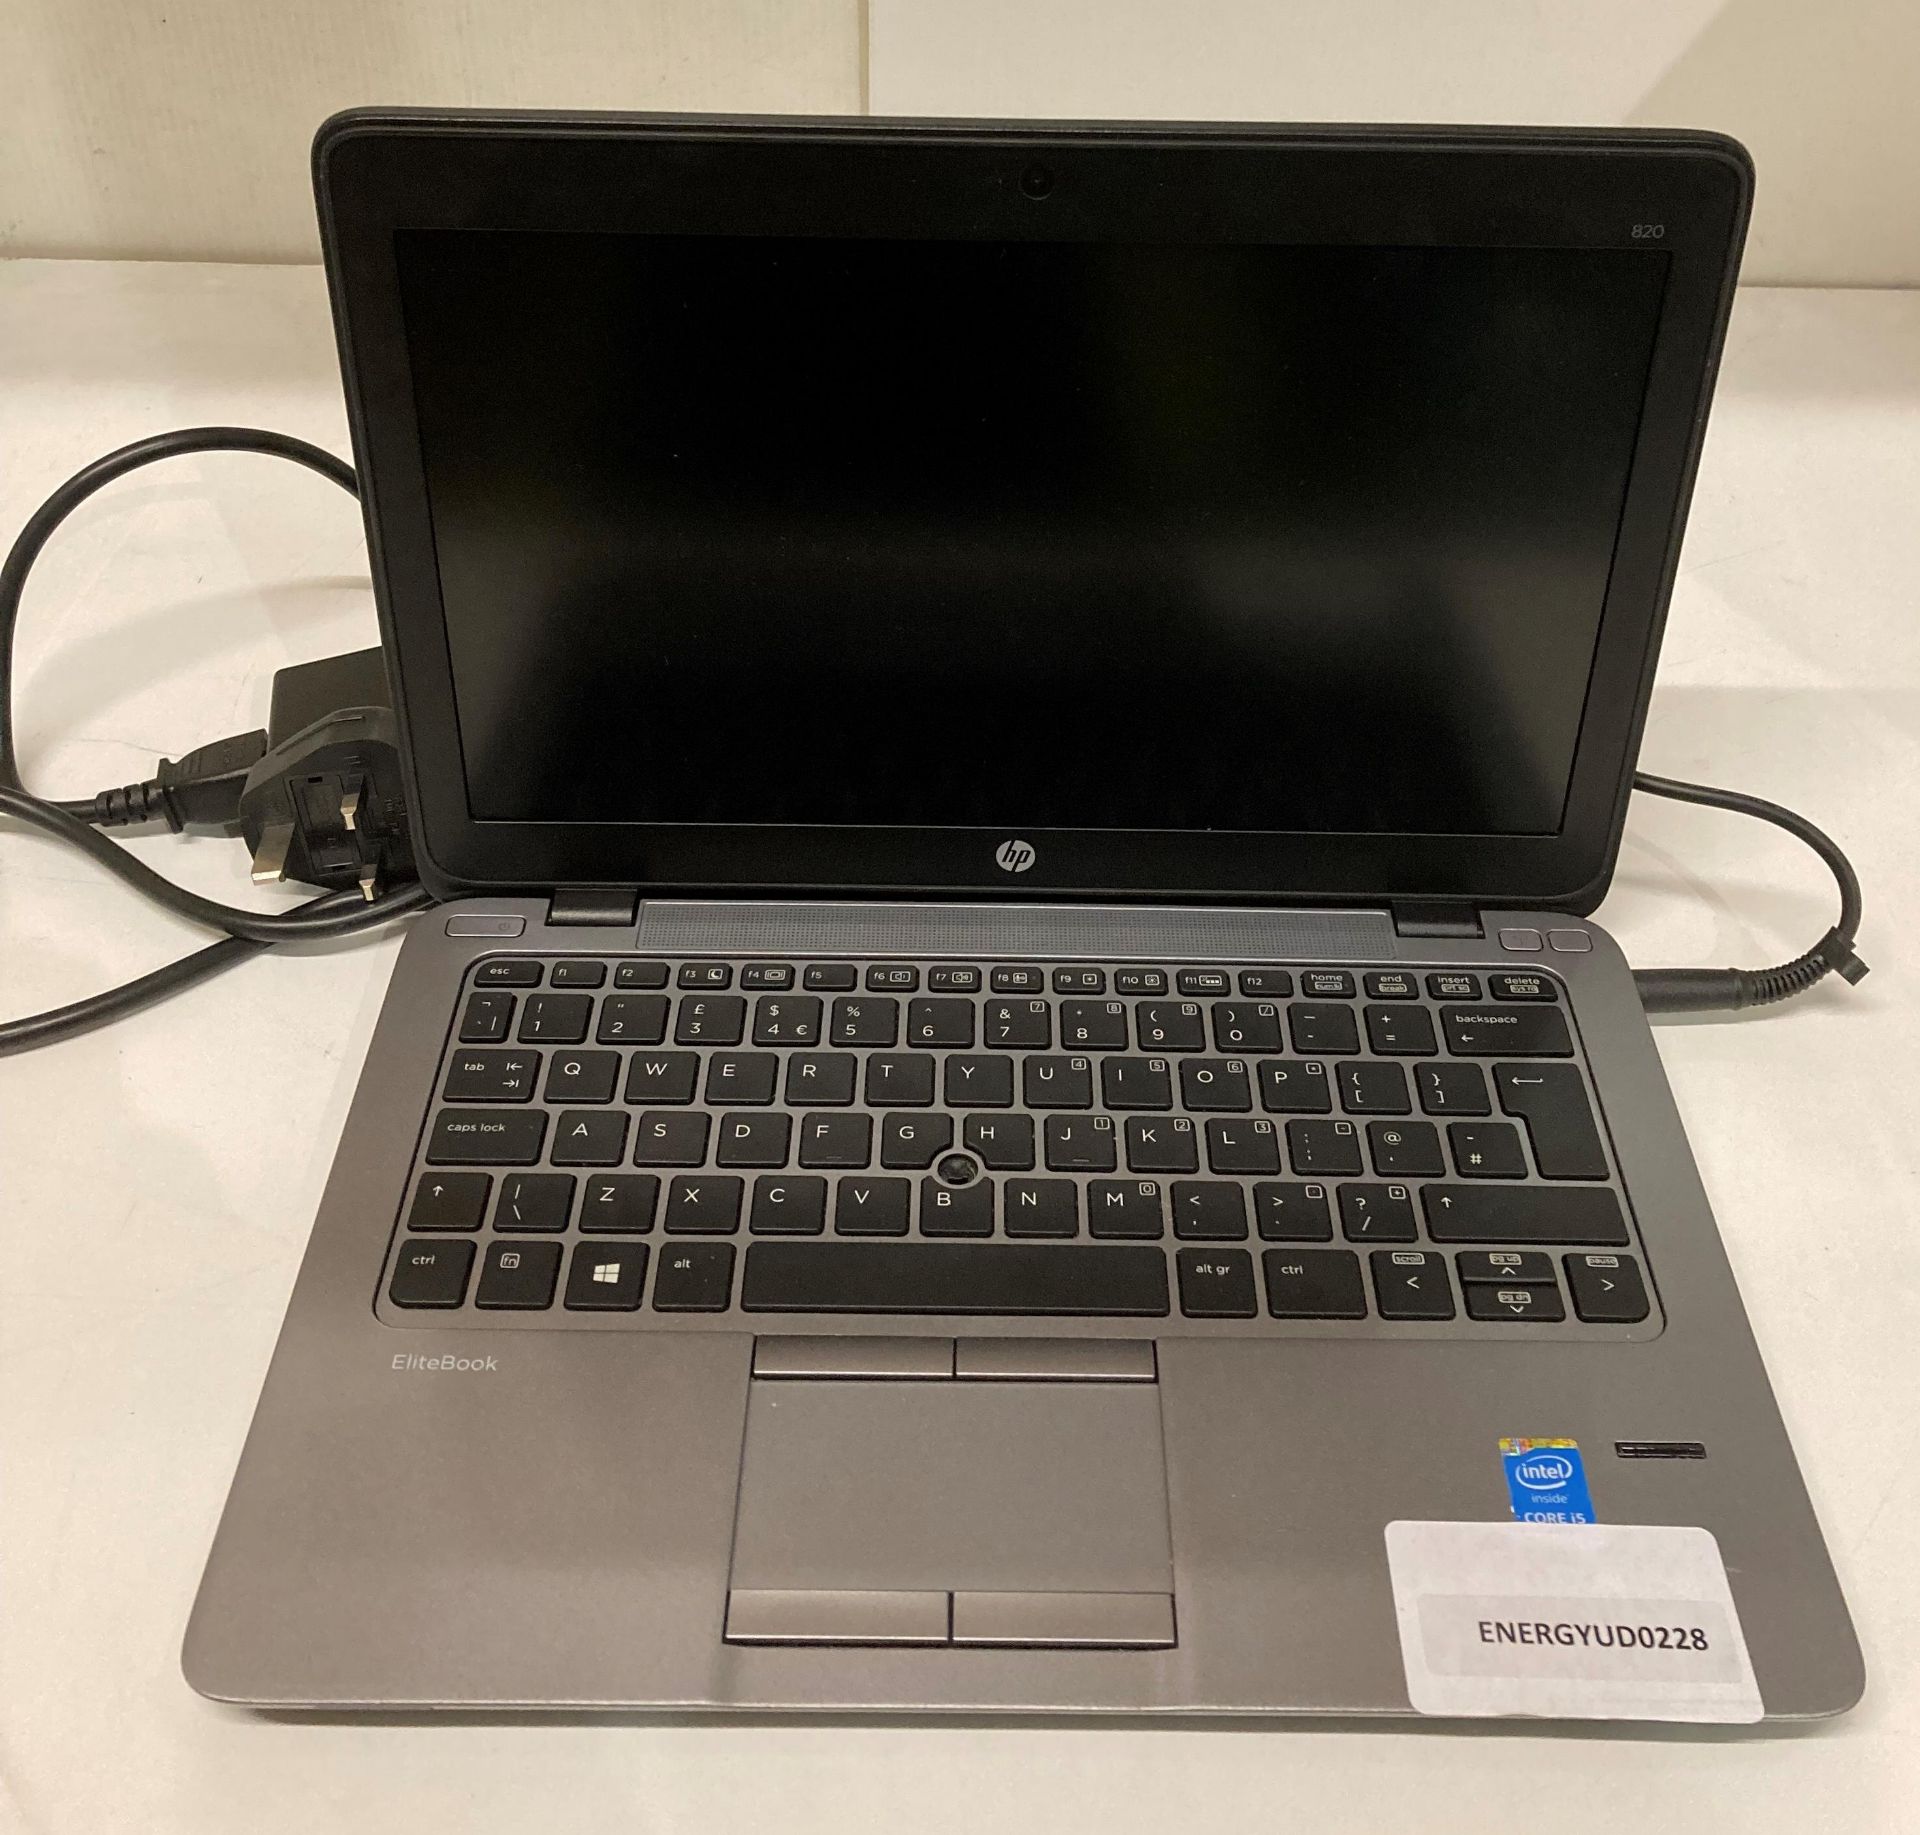 HP Elitebook 820 G2 i5 laptop, 4GB RAM, 500GB Hard Drive with power supply.